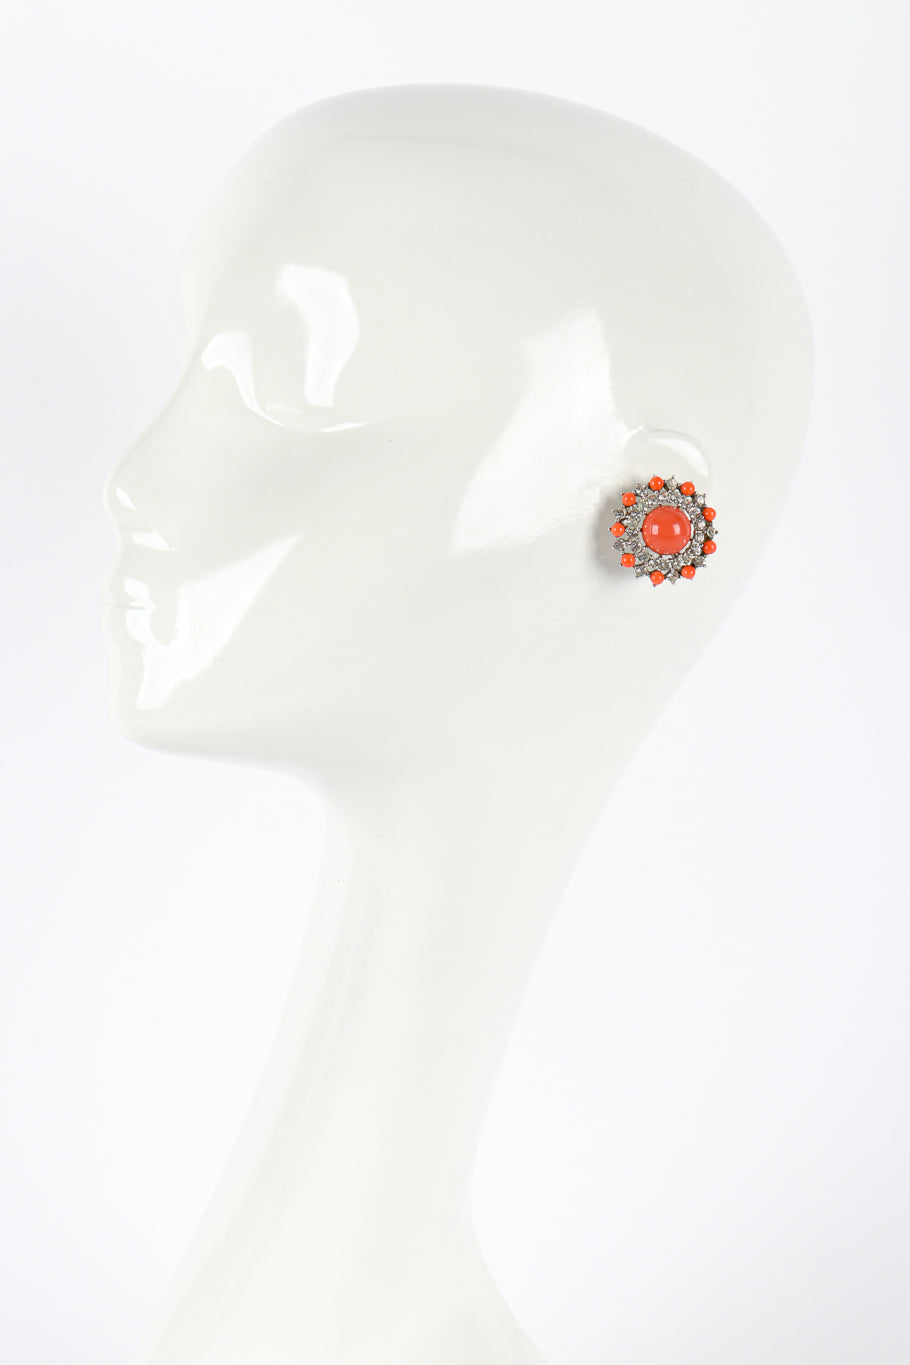 Vintage Trifari Coral Lucite Necklace & Earring Set earring on mannequin @recess la